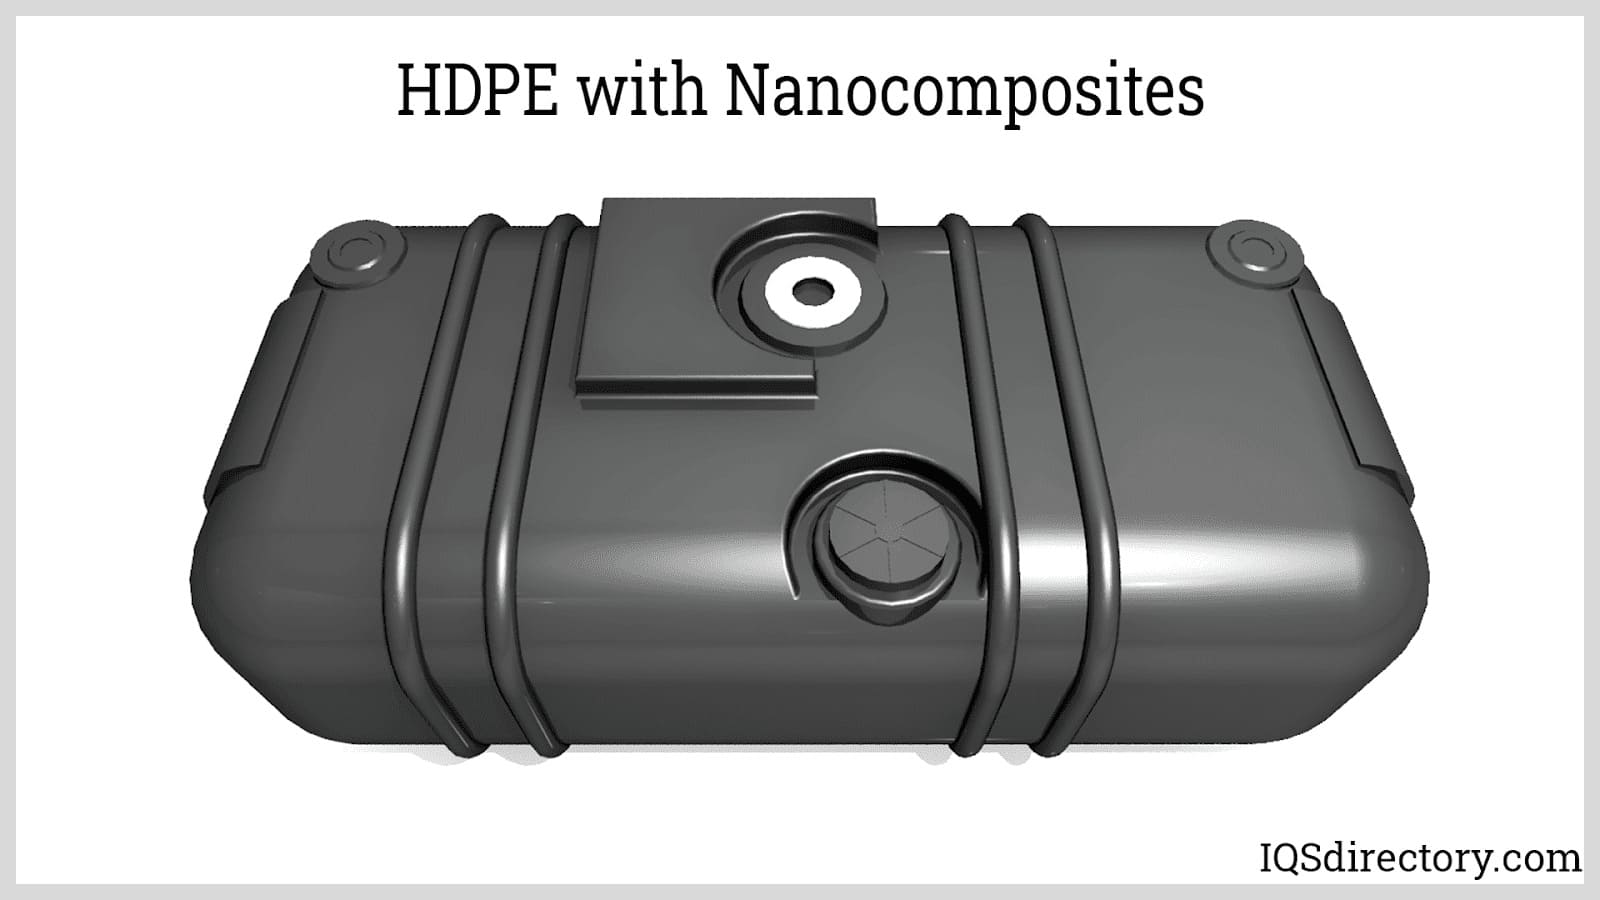 HDPE with Nanocomposites